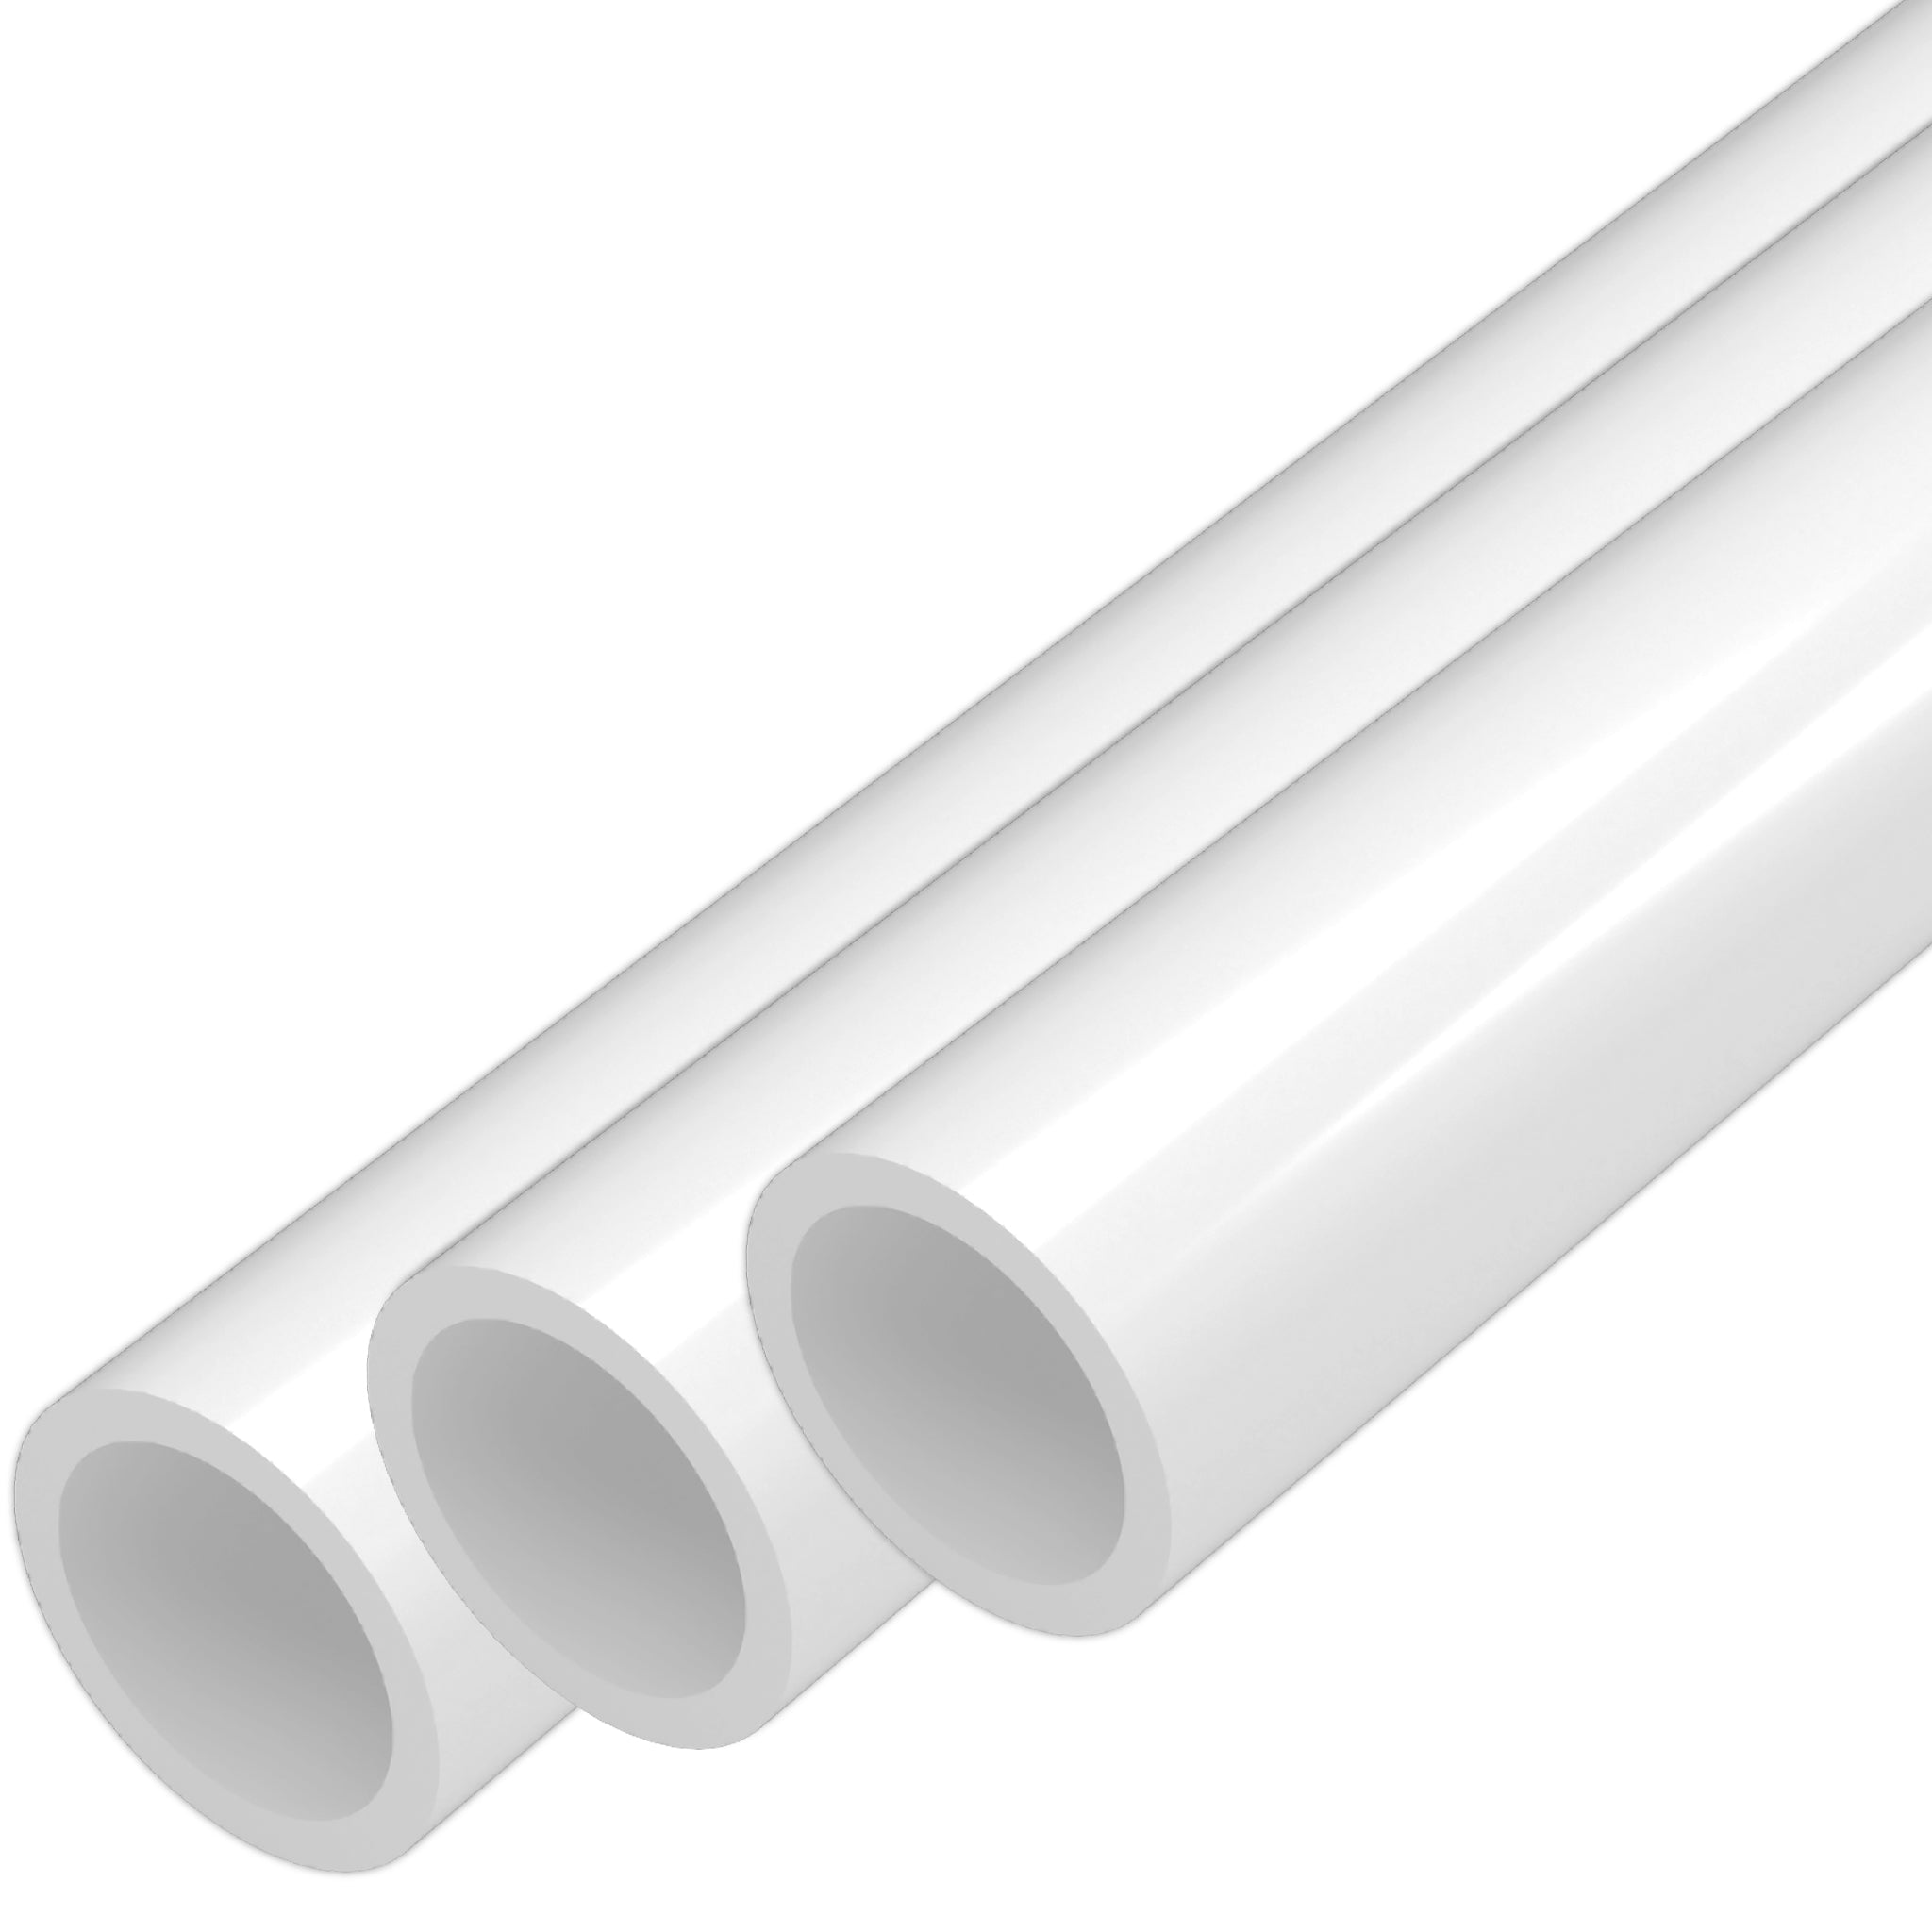 Formufit Furniture Grade PVC Pipe, 40, 3/4 size, White (3-Pack)